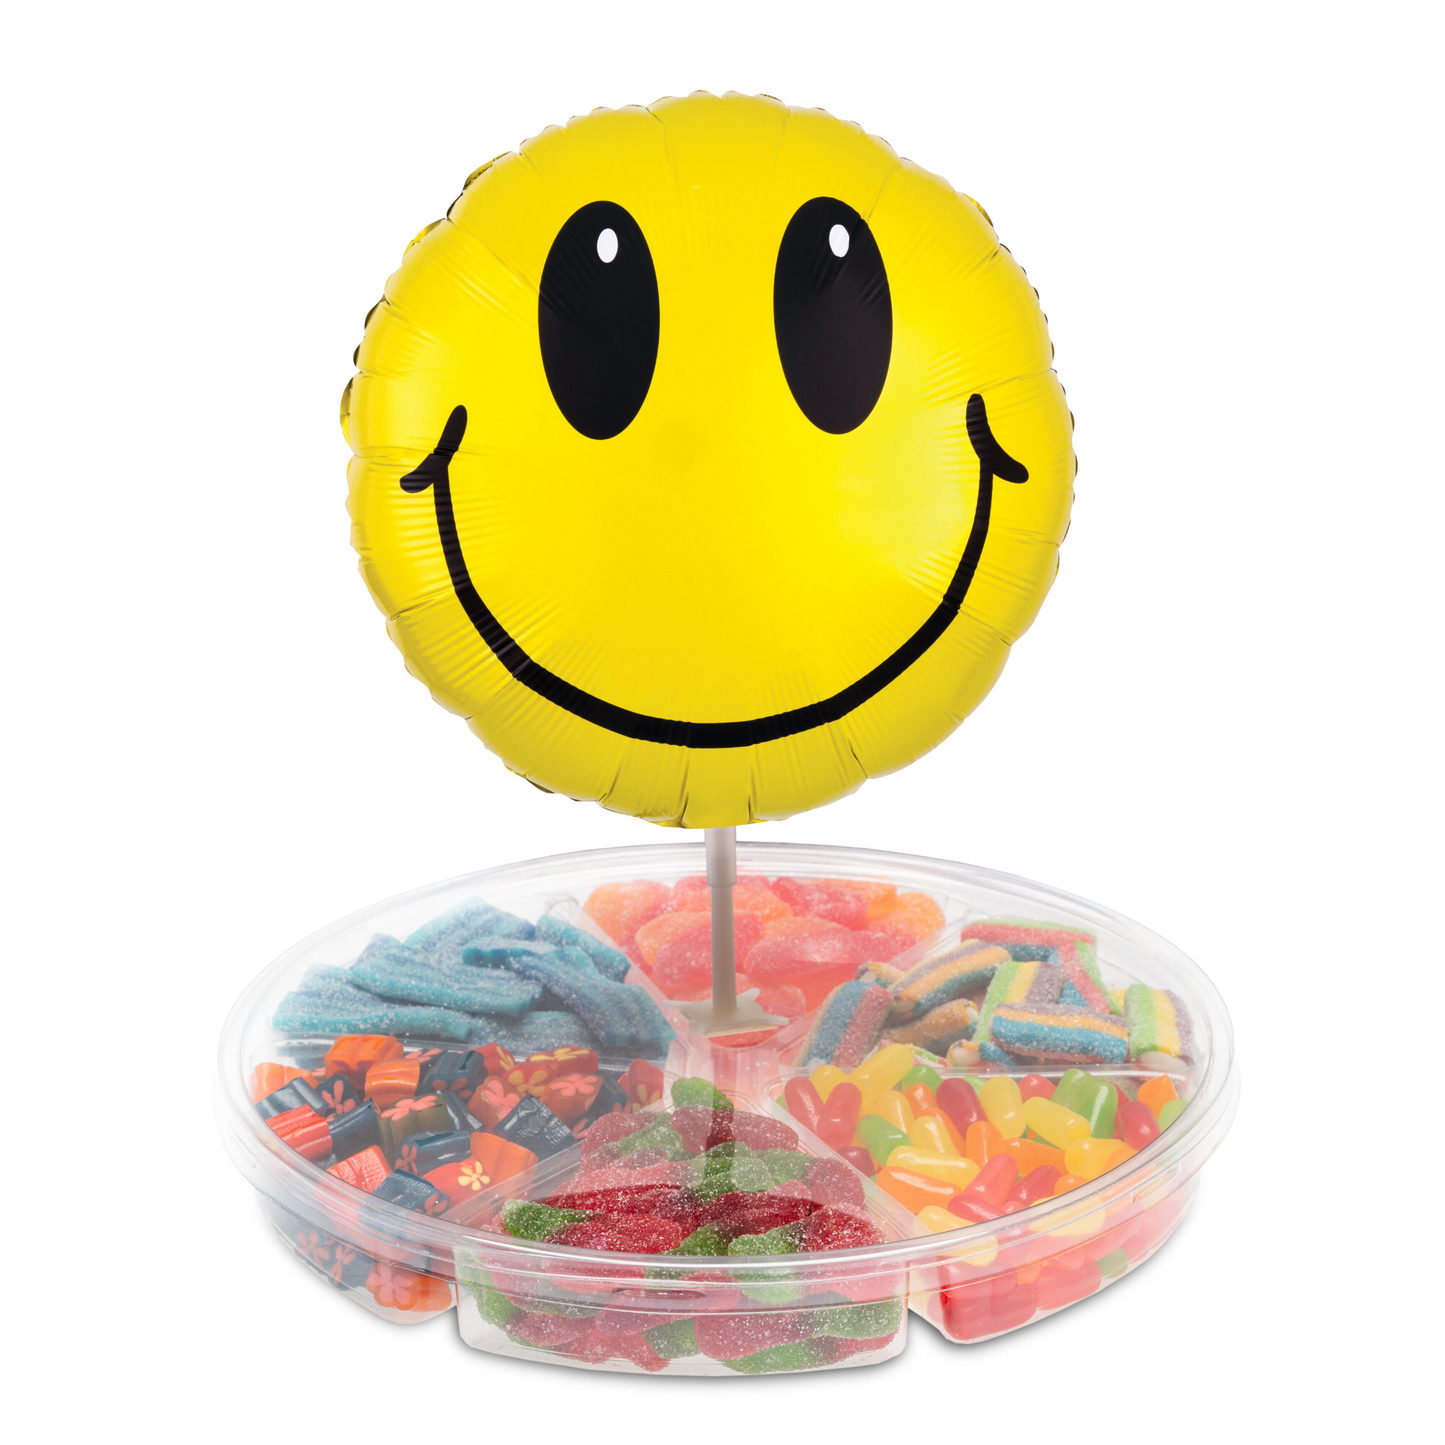 Medium Candy Platter, Choose Your Balloon